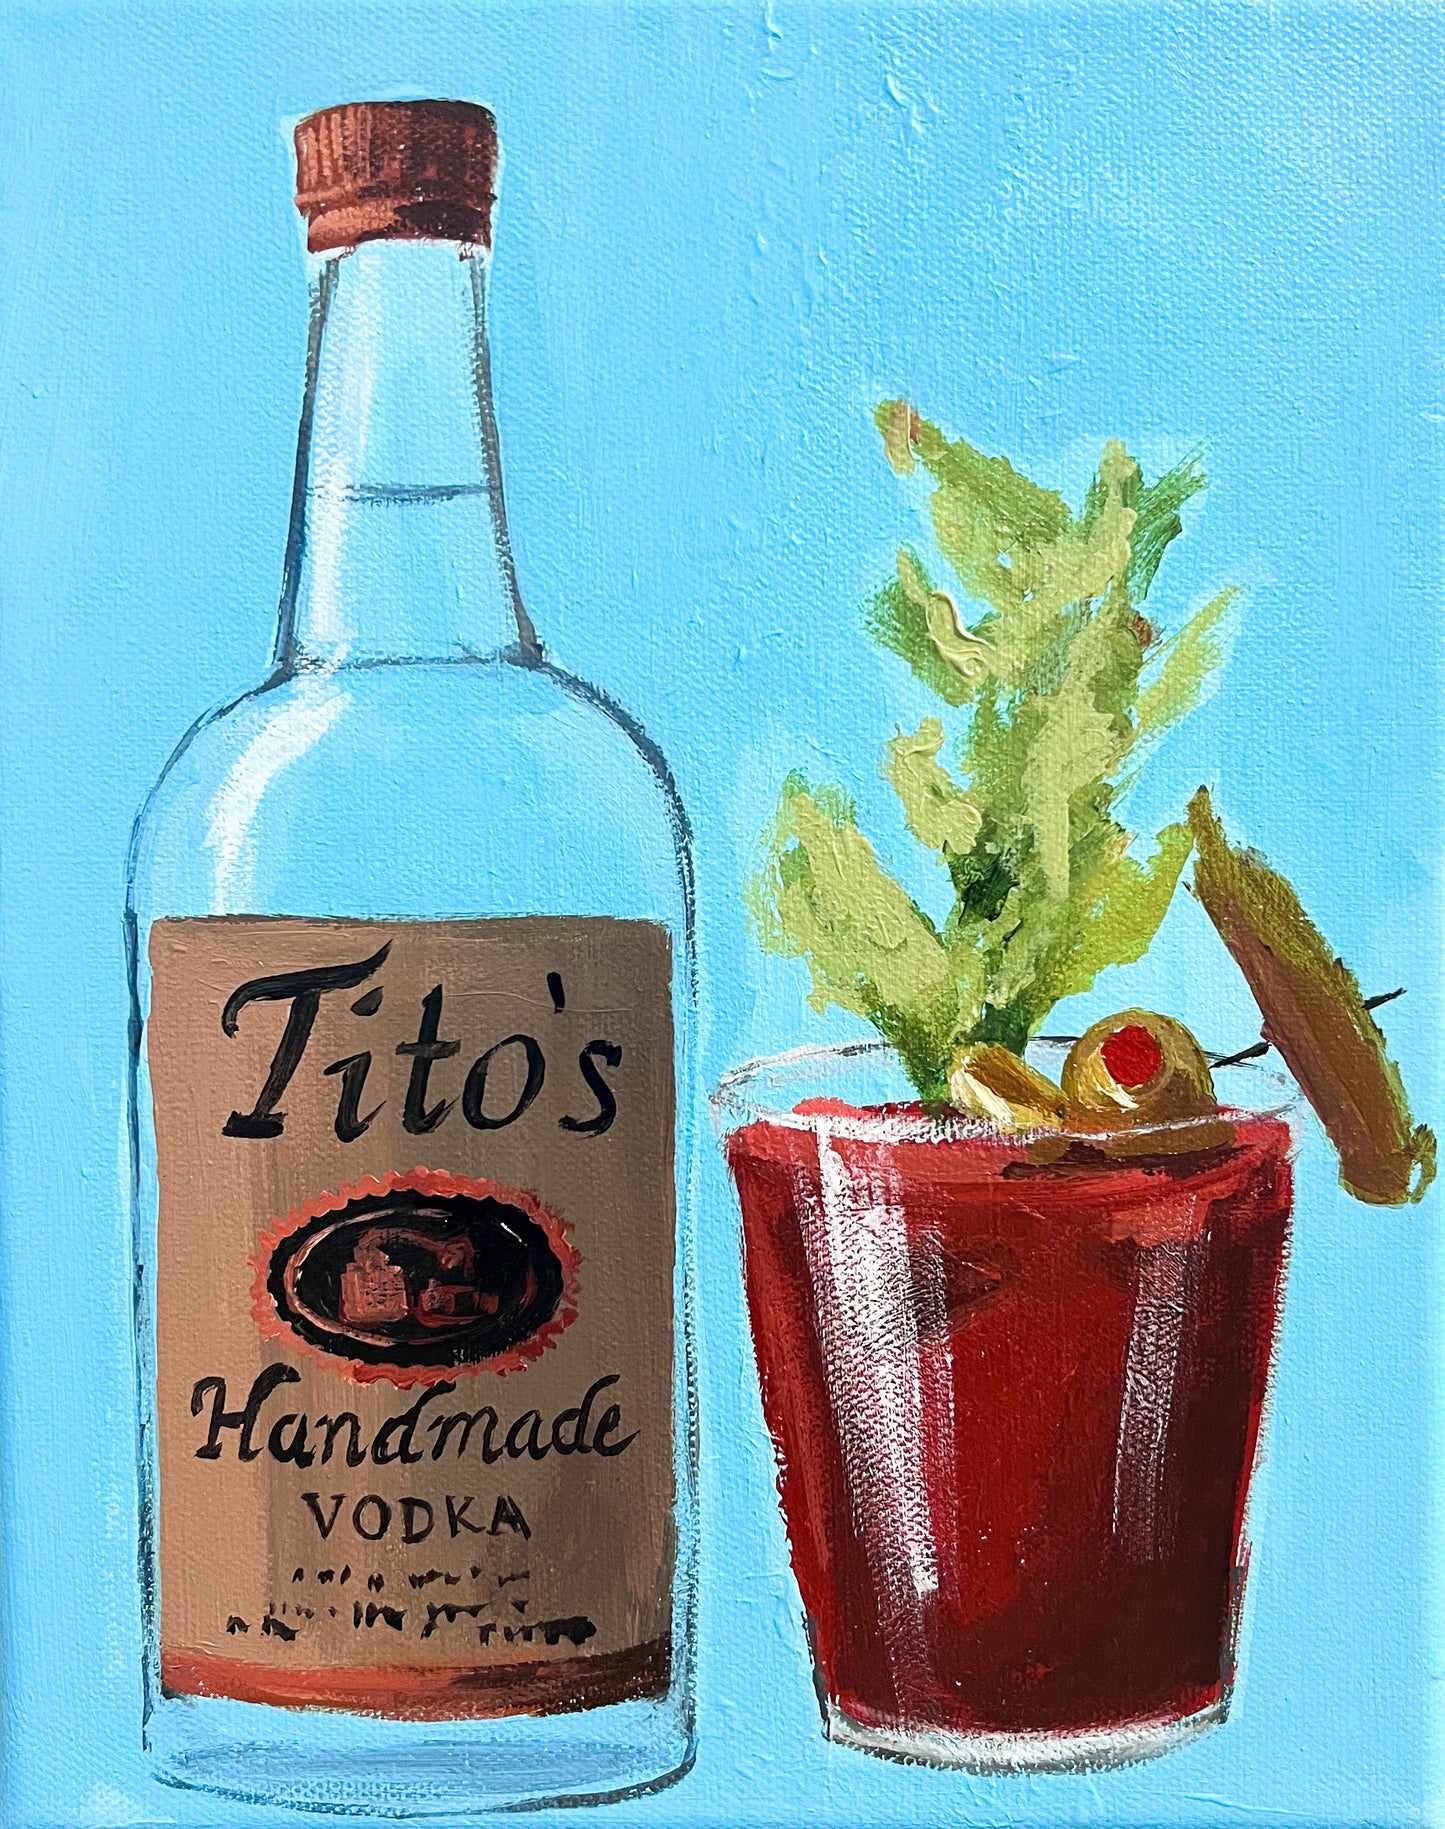 Tito's Bloody Mary